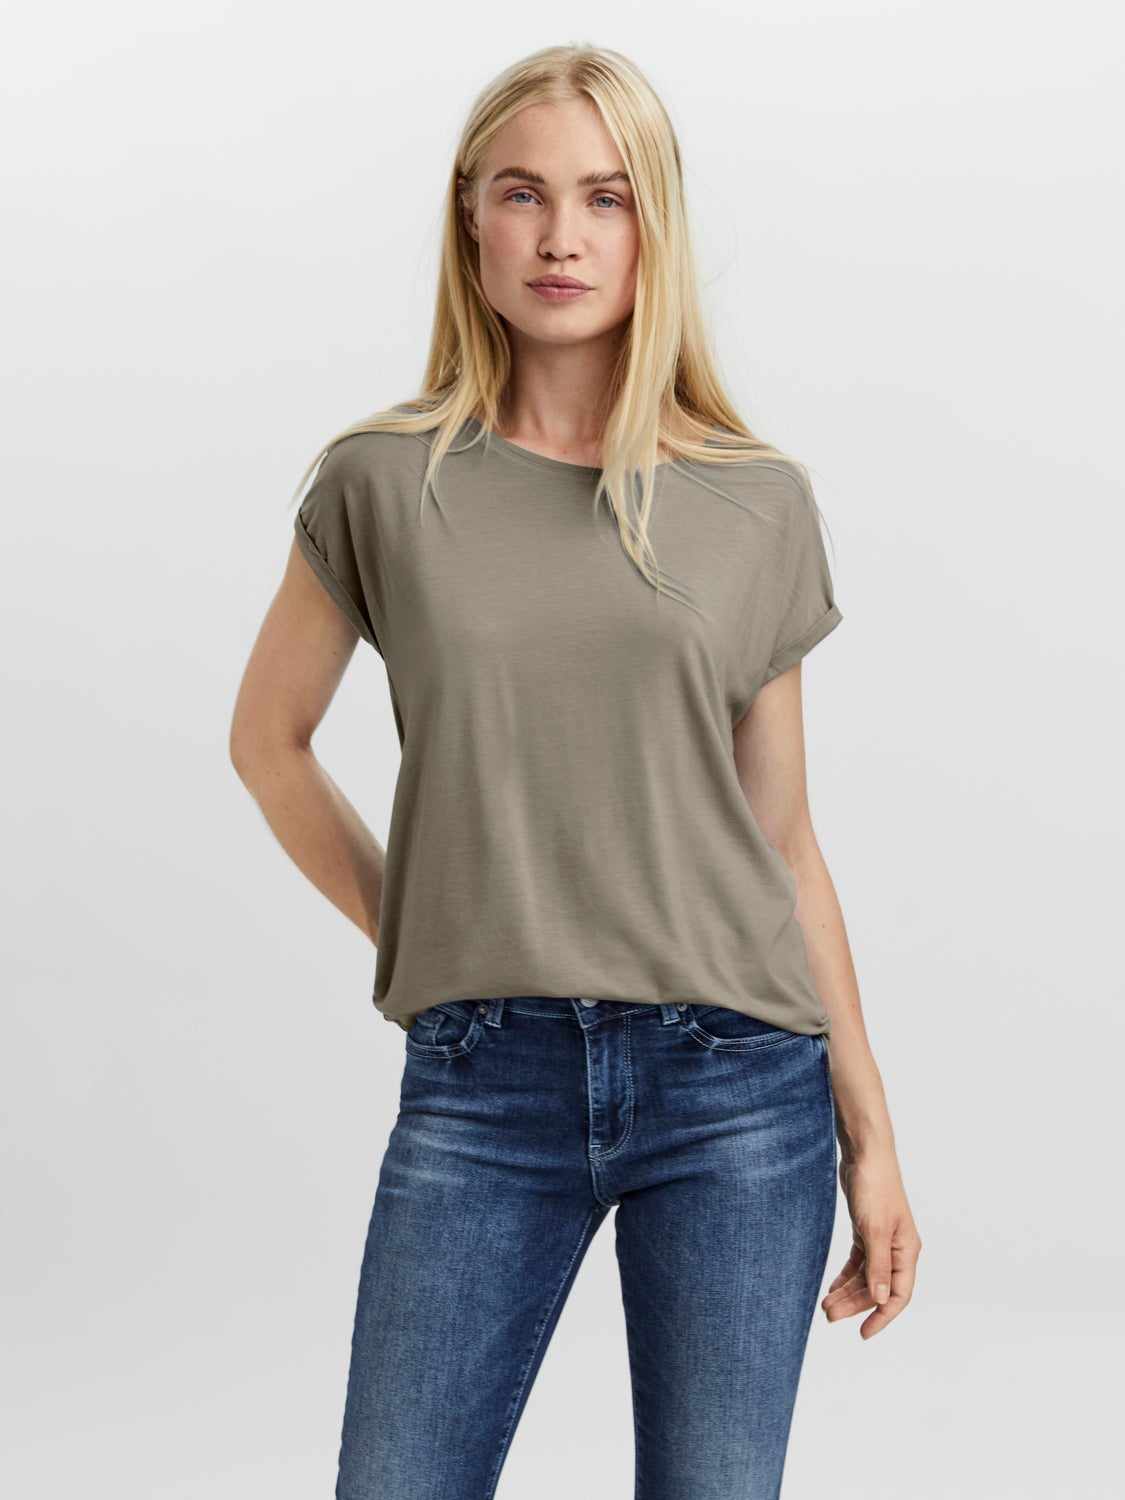 Vero Moda T-shirt Brown M WOMEN FASHION Shirts & T-shirts Slip discount 54% 